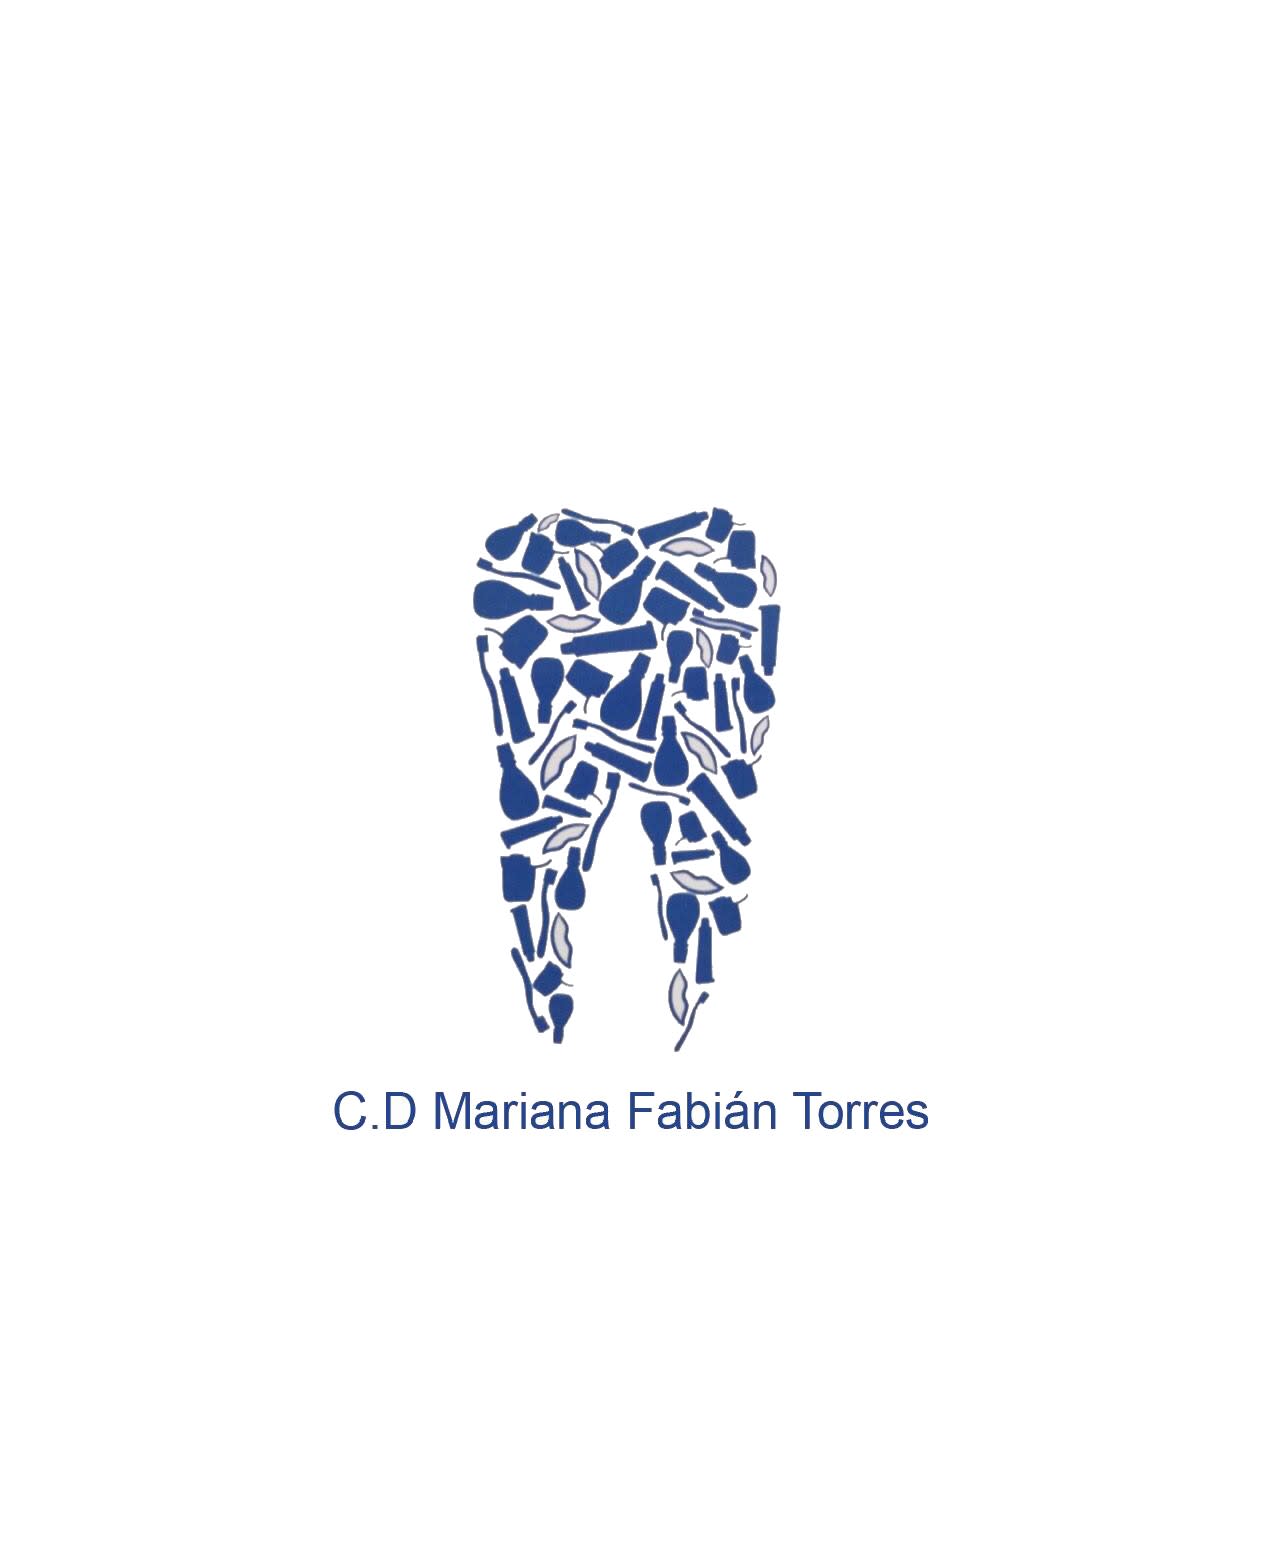 C. D Mariana Fabián Torres